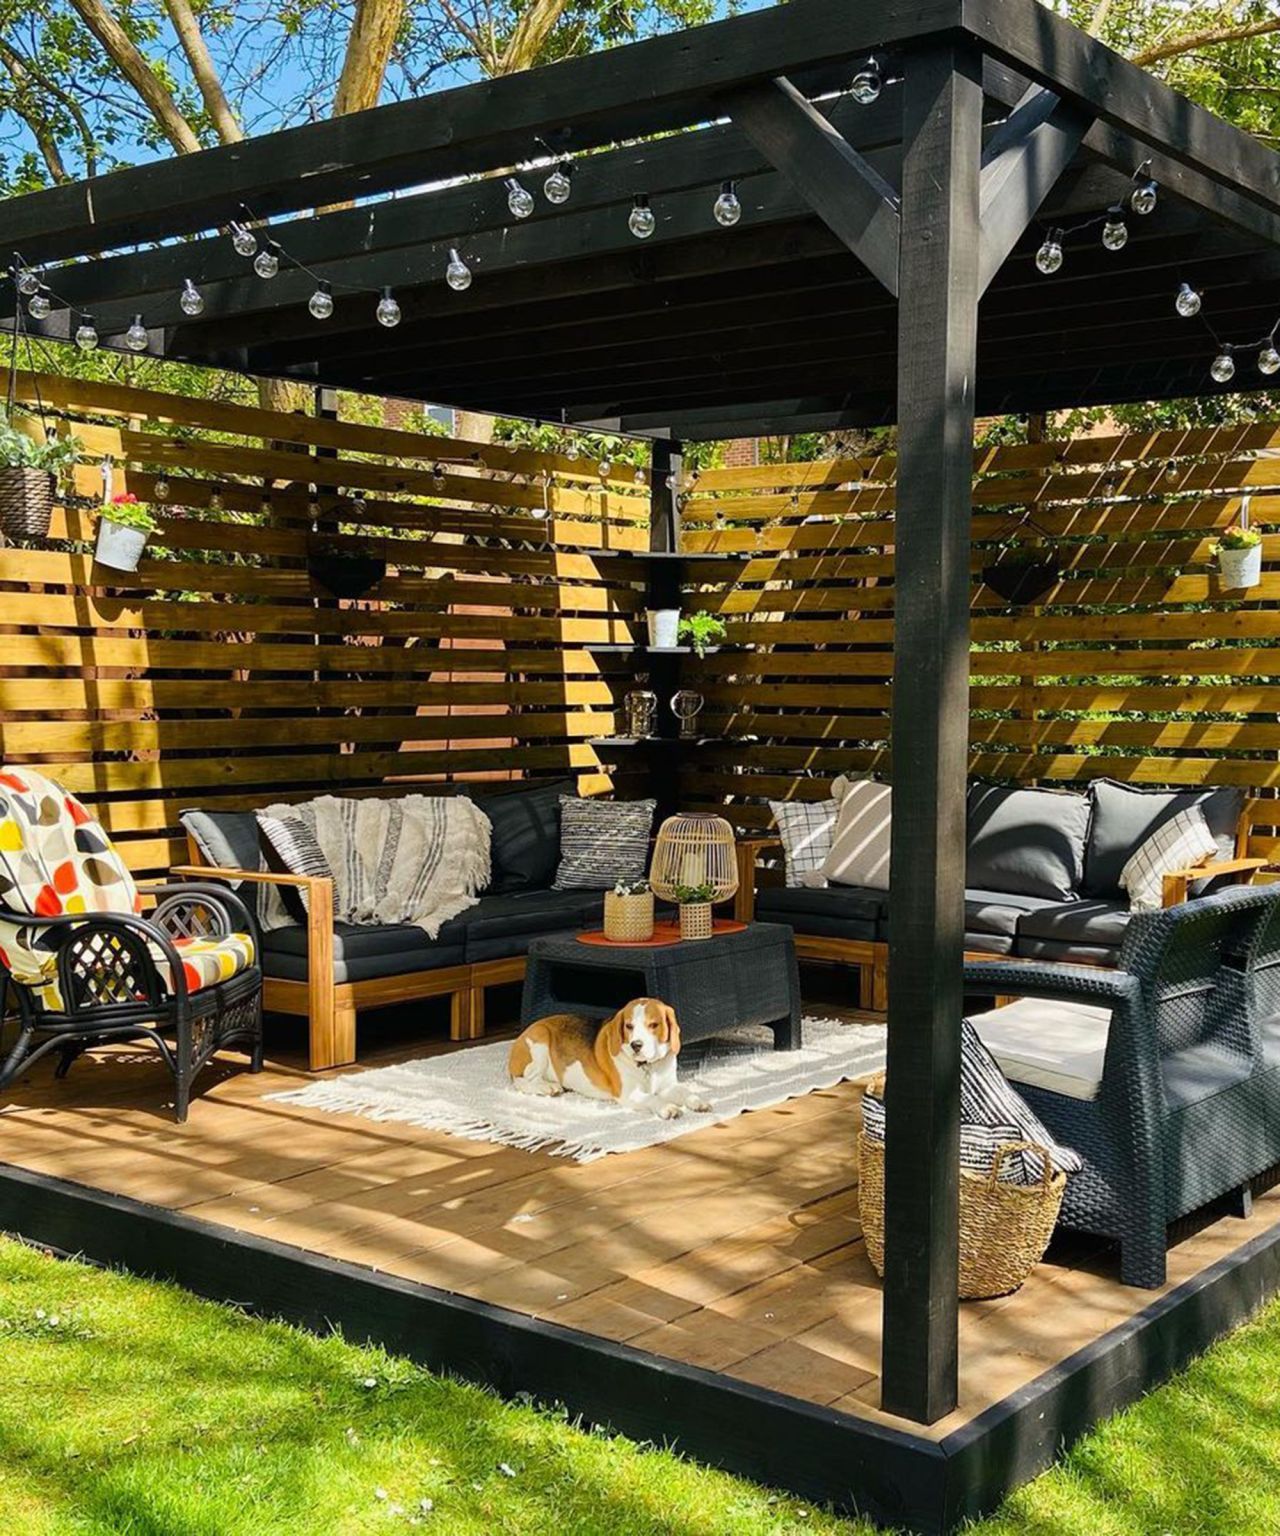 Stunning Garden Pergola Ideas to
Transform Your Outdoor Space